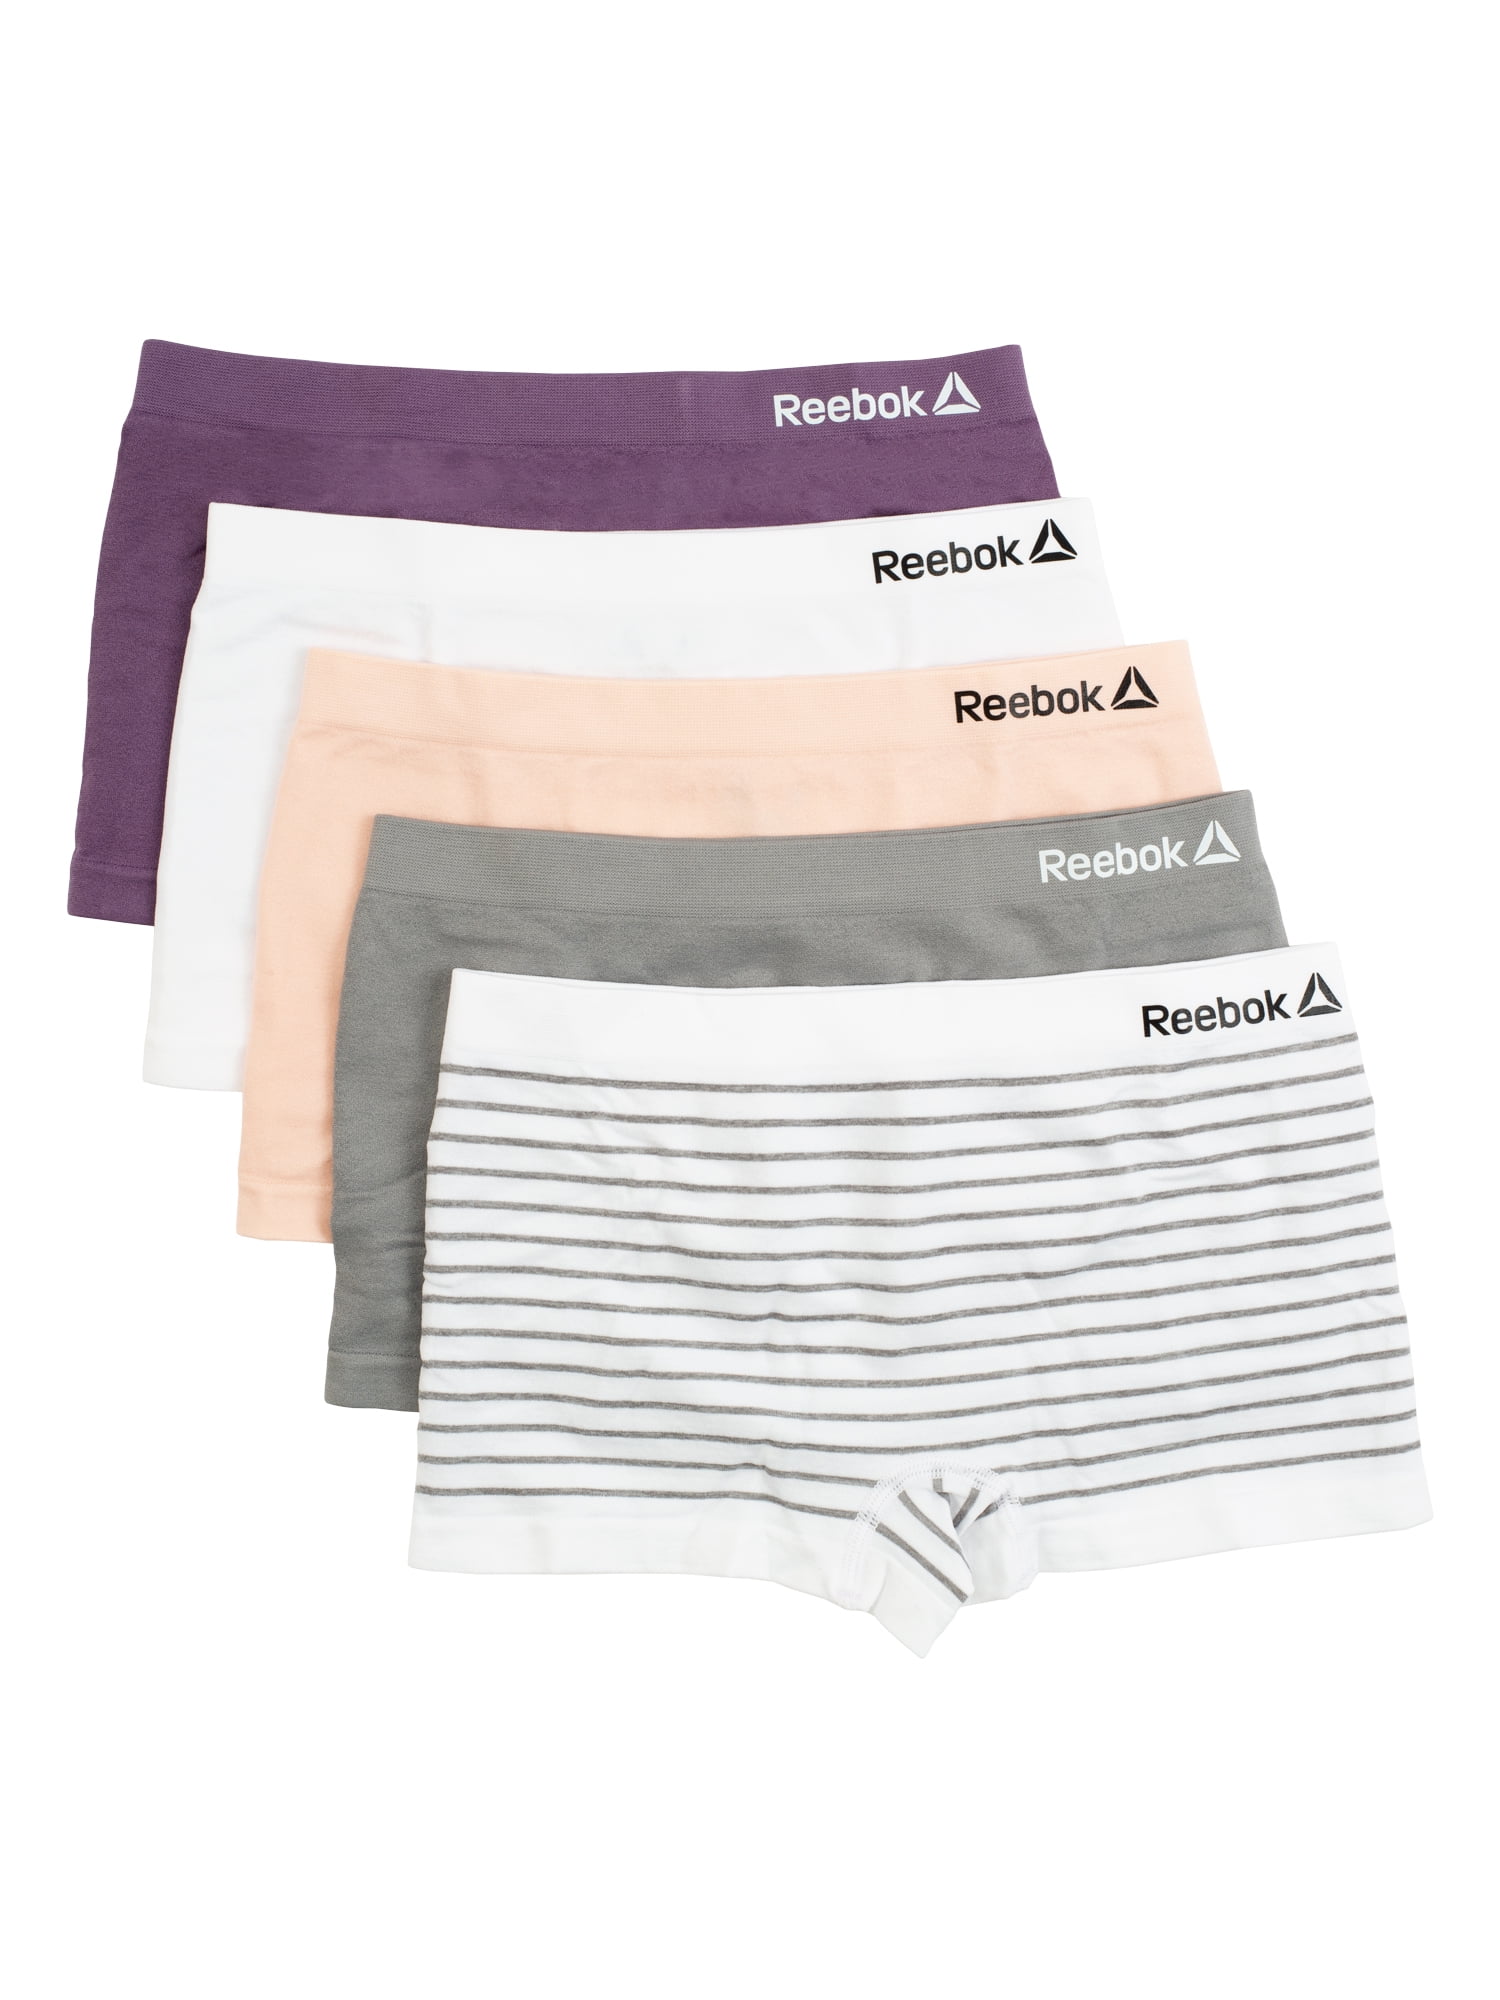 Reebok Girls Seamless Boyshort Panties Underwear, 5-Pack, Sizes S-XL